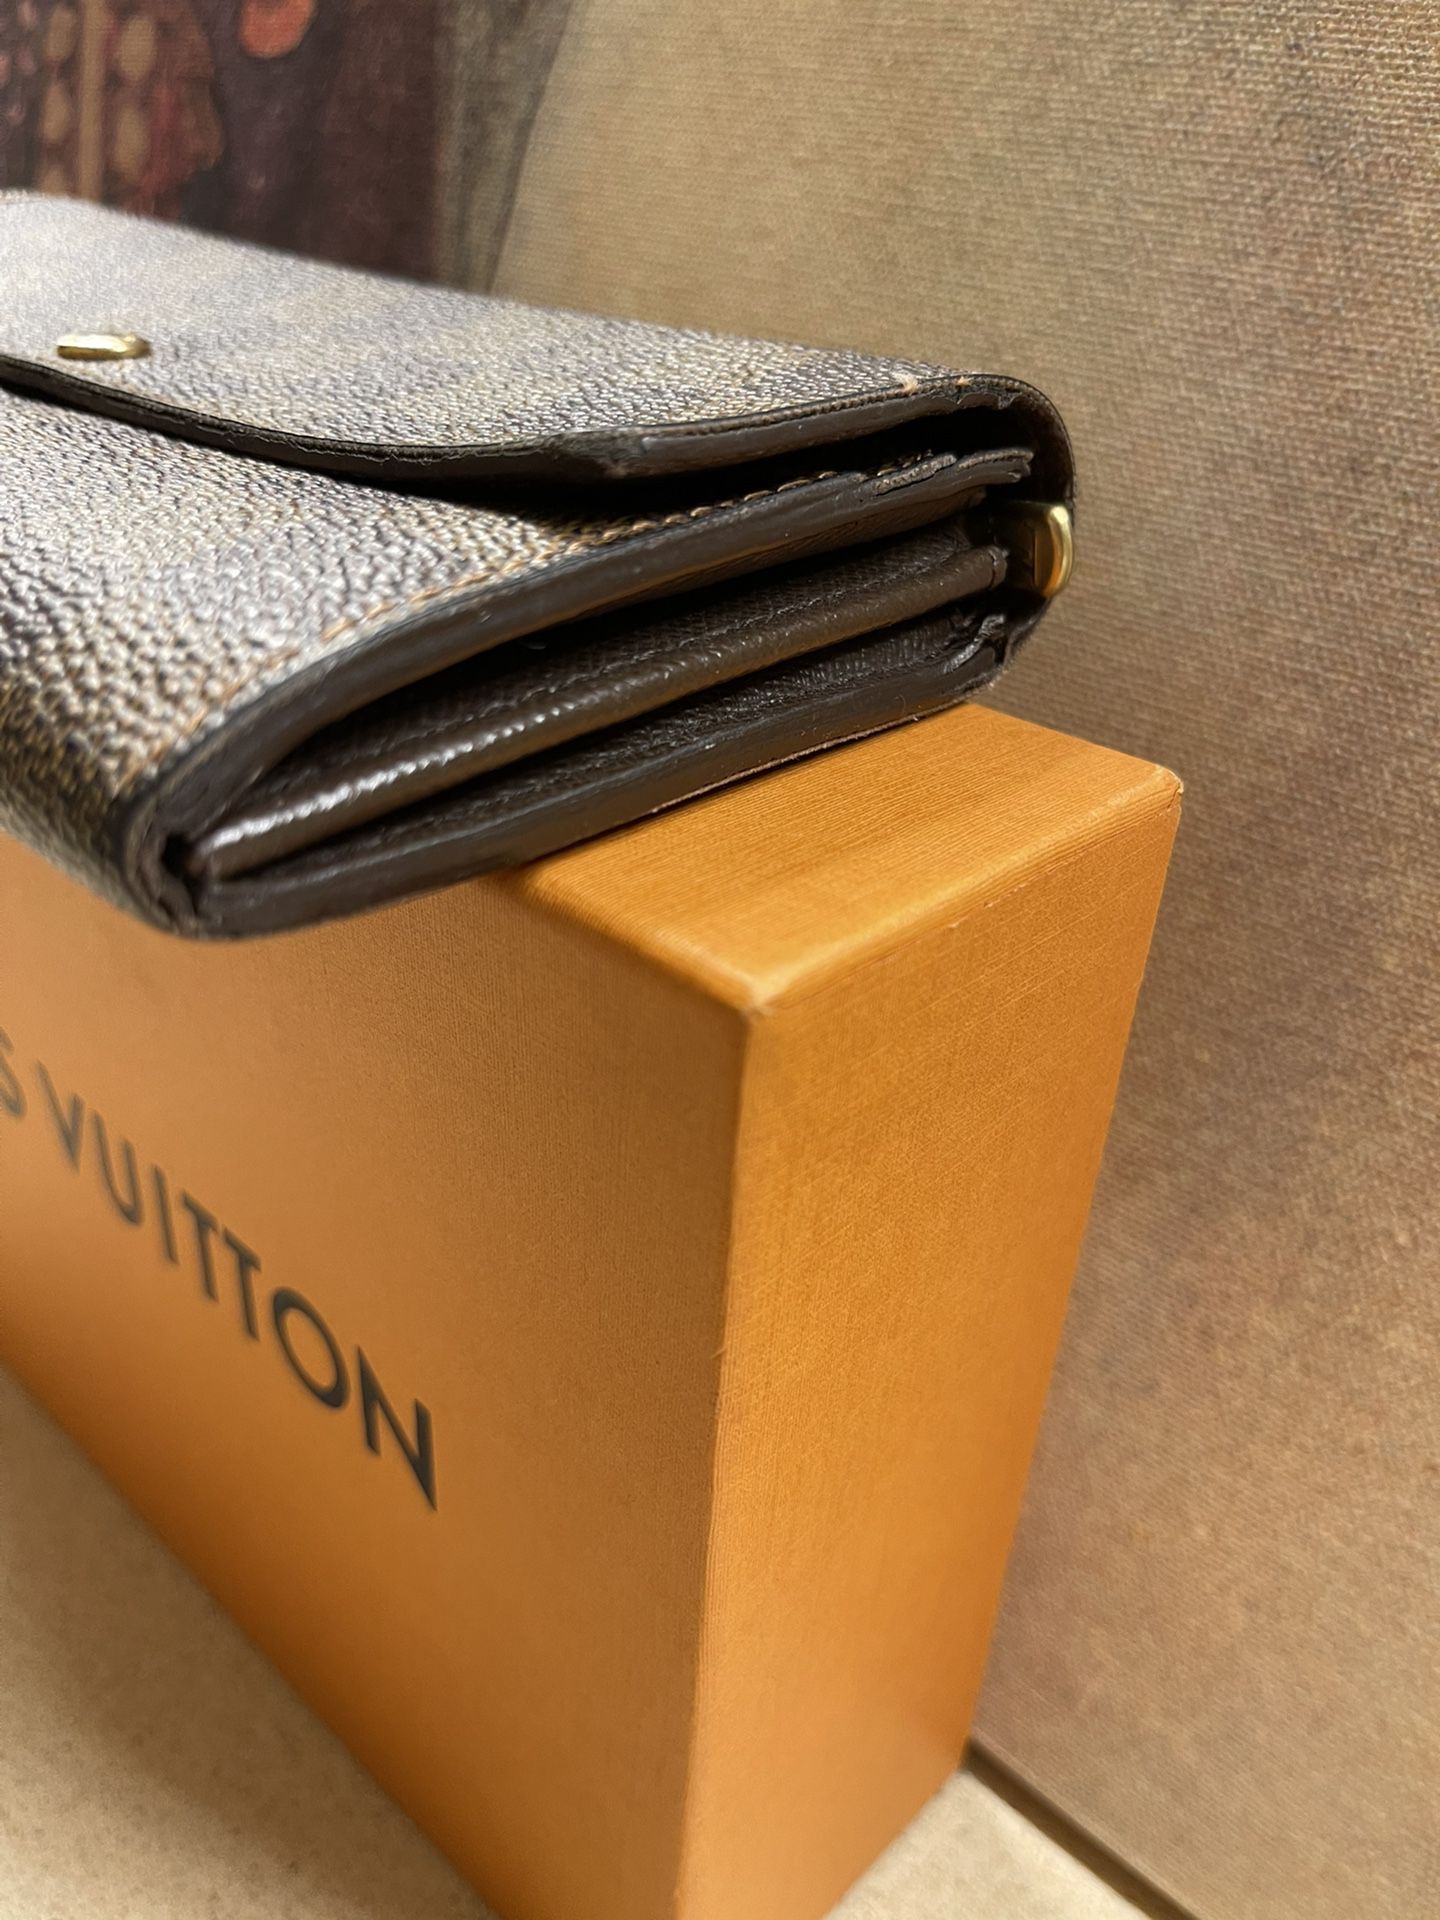 Louis Vuitton Wallet for Sale in Claremont, CA - OfferUp